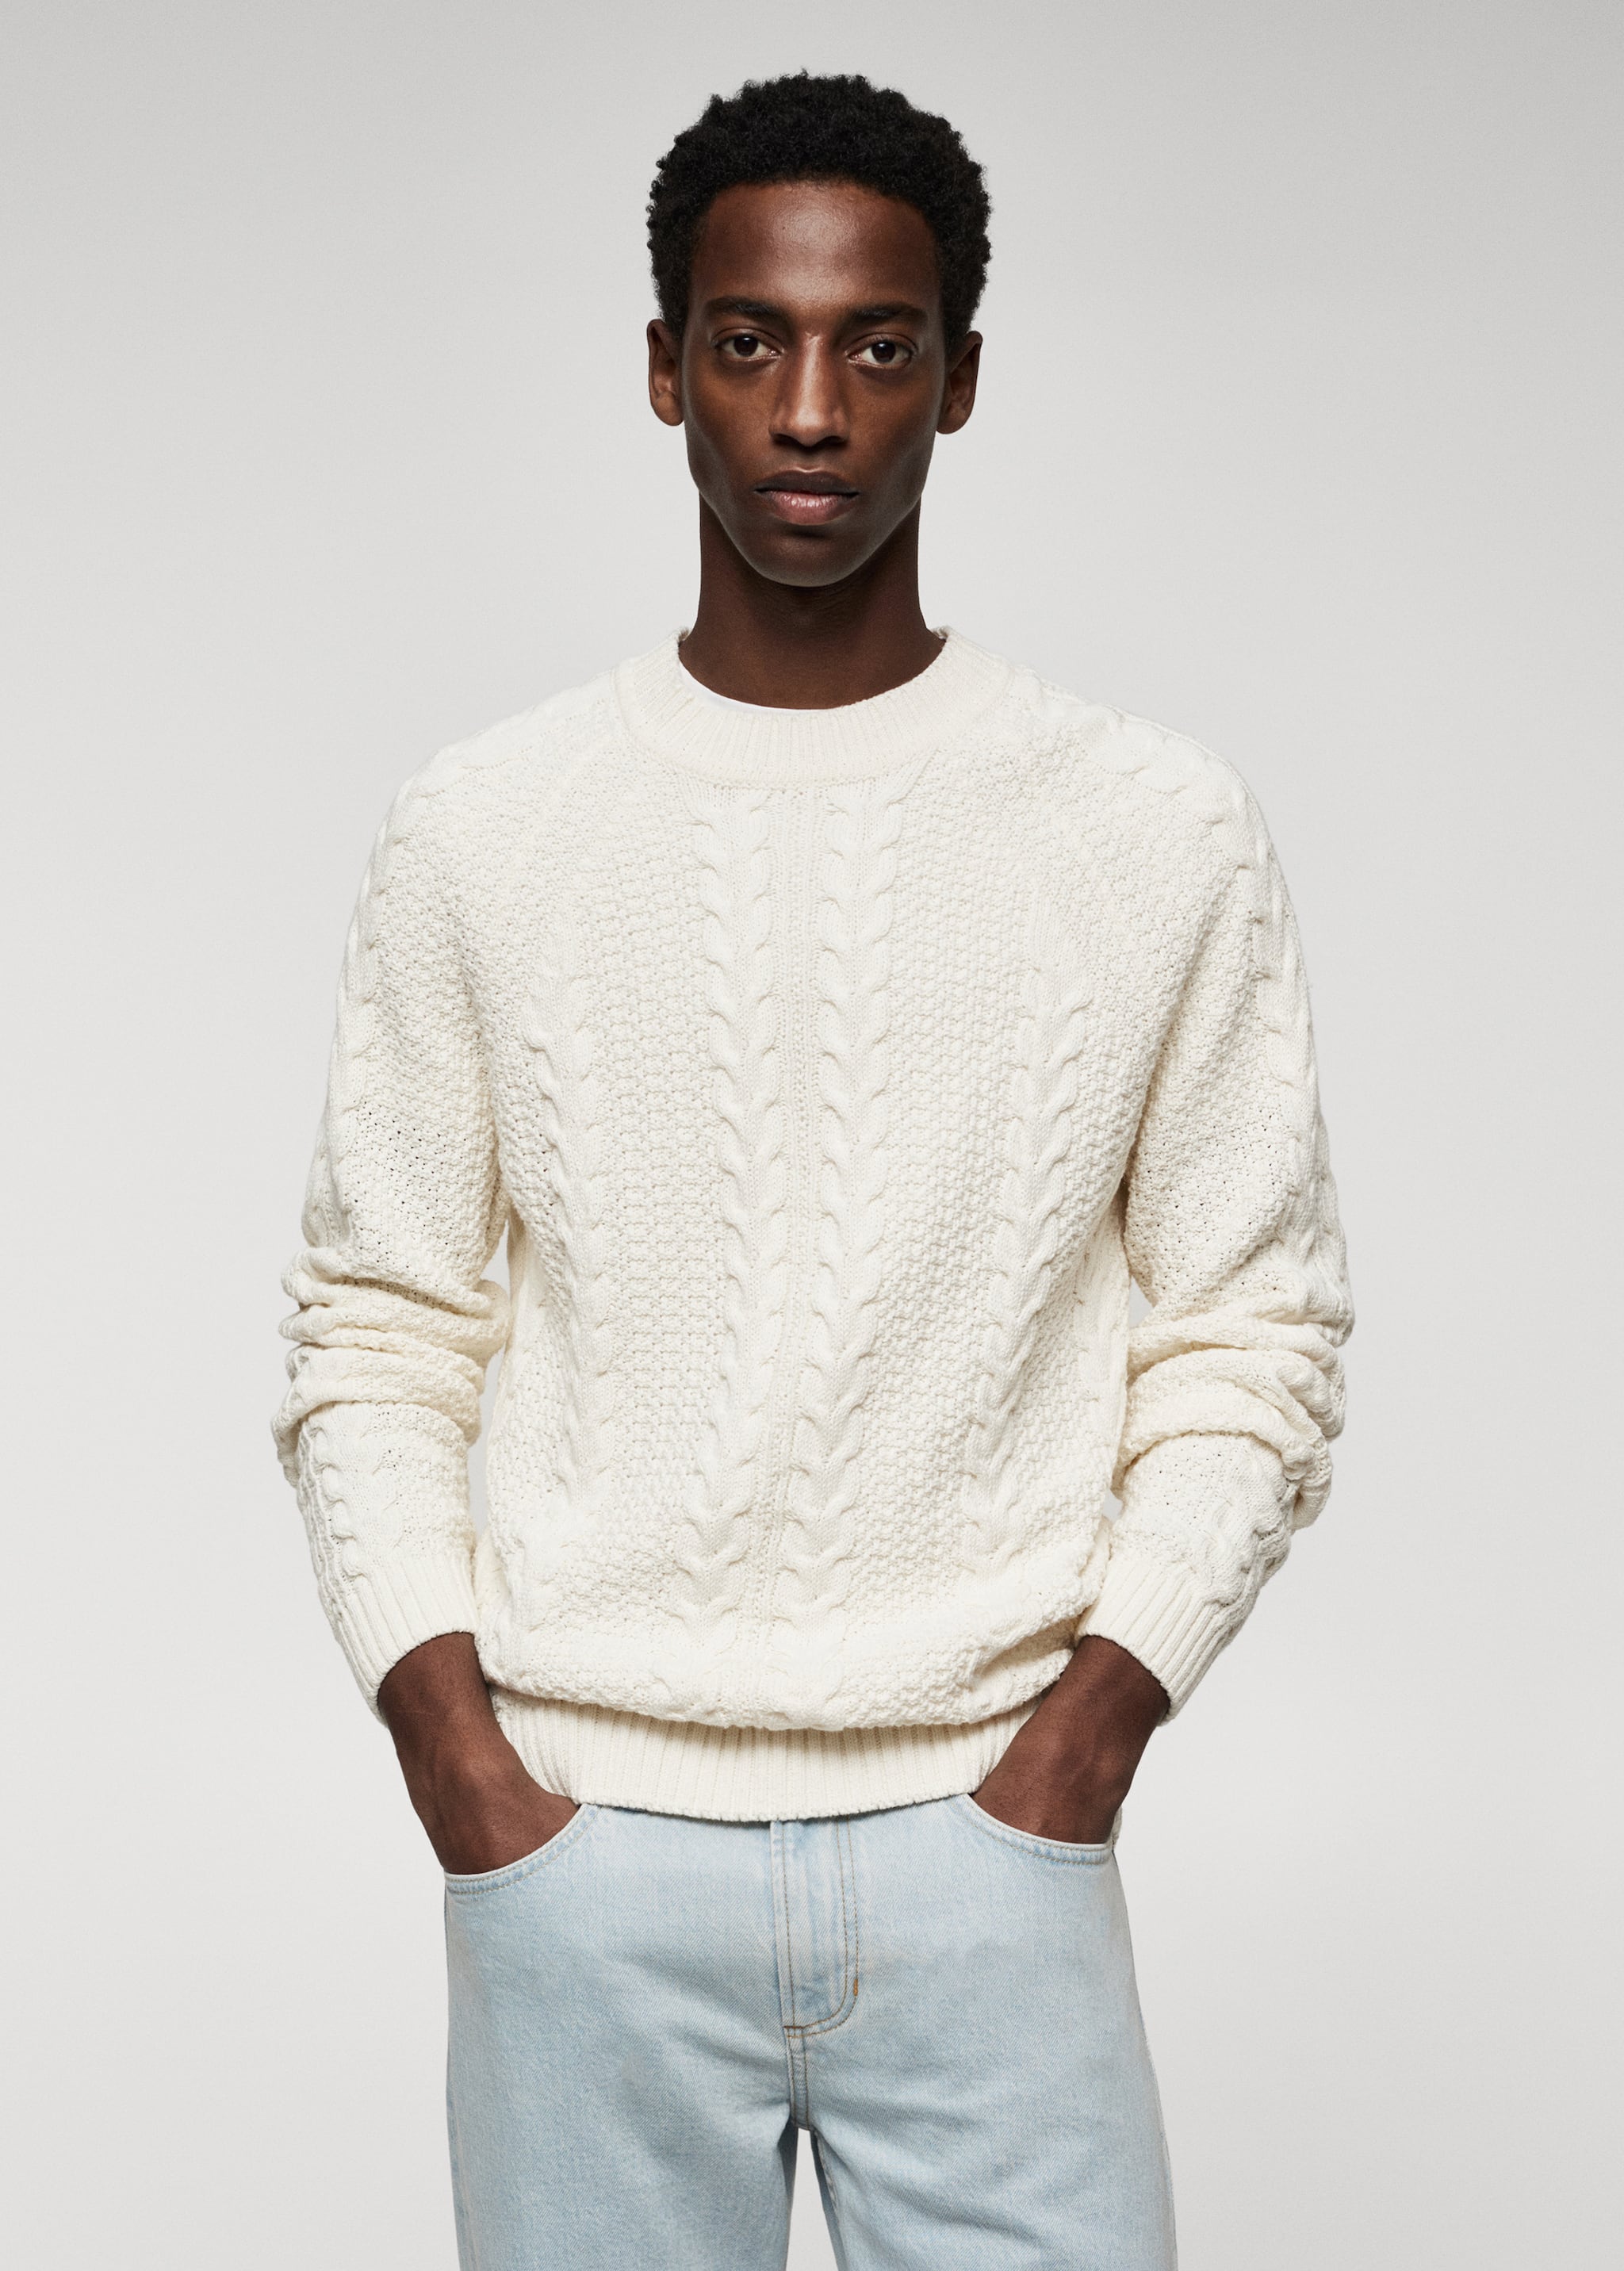 Braided cotton sweater - Medium plane